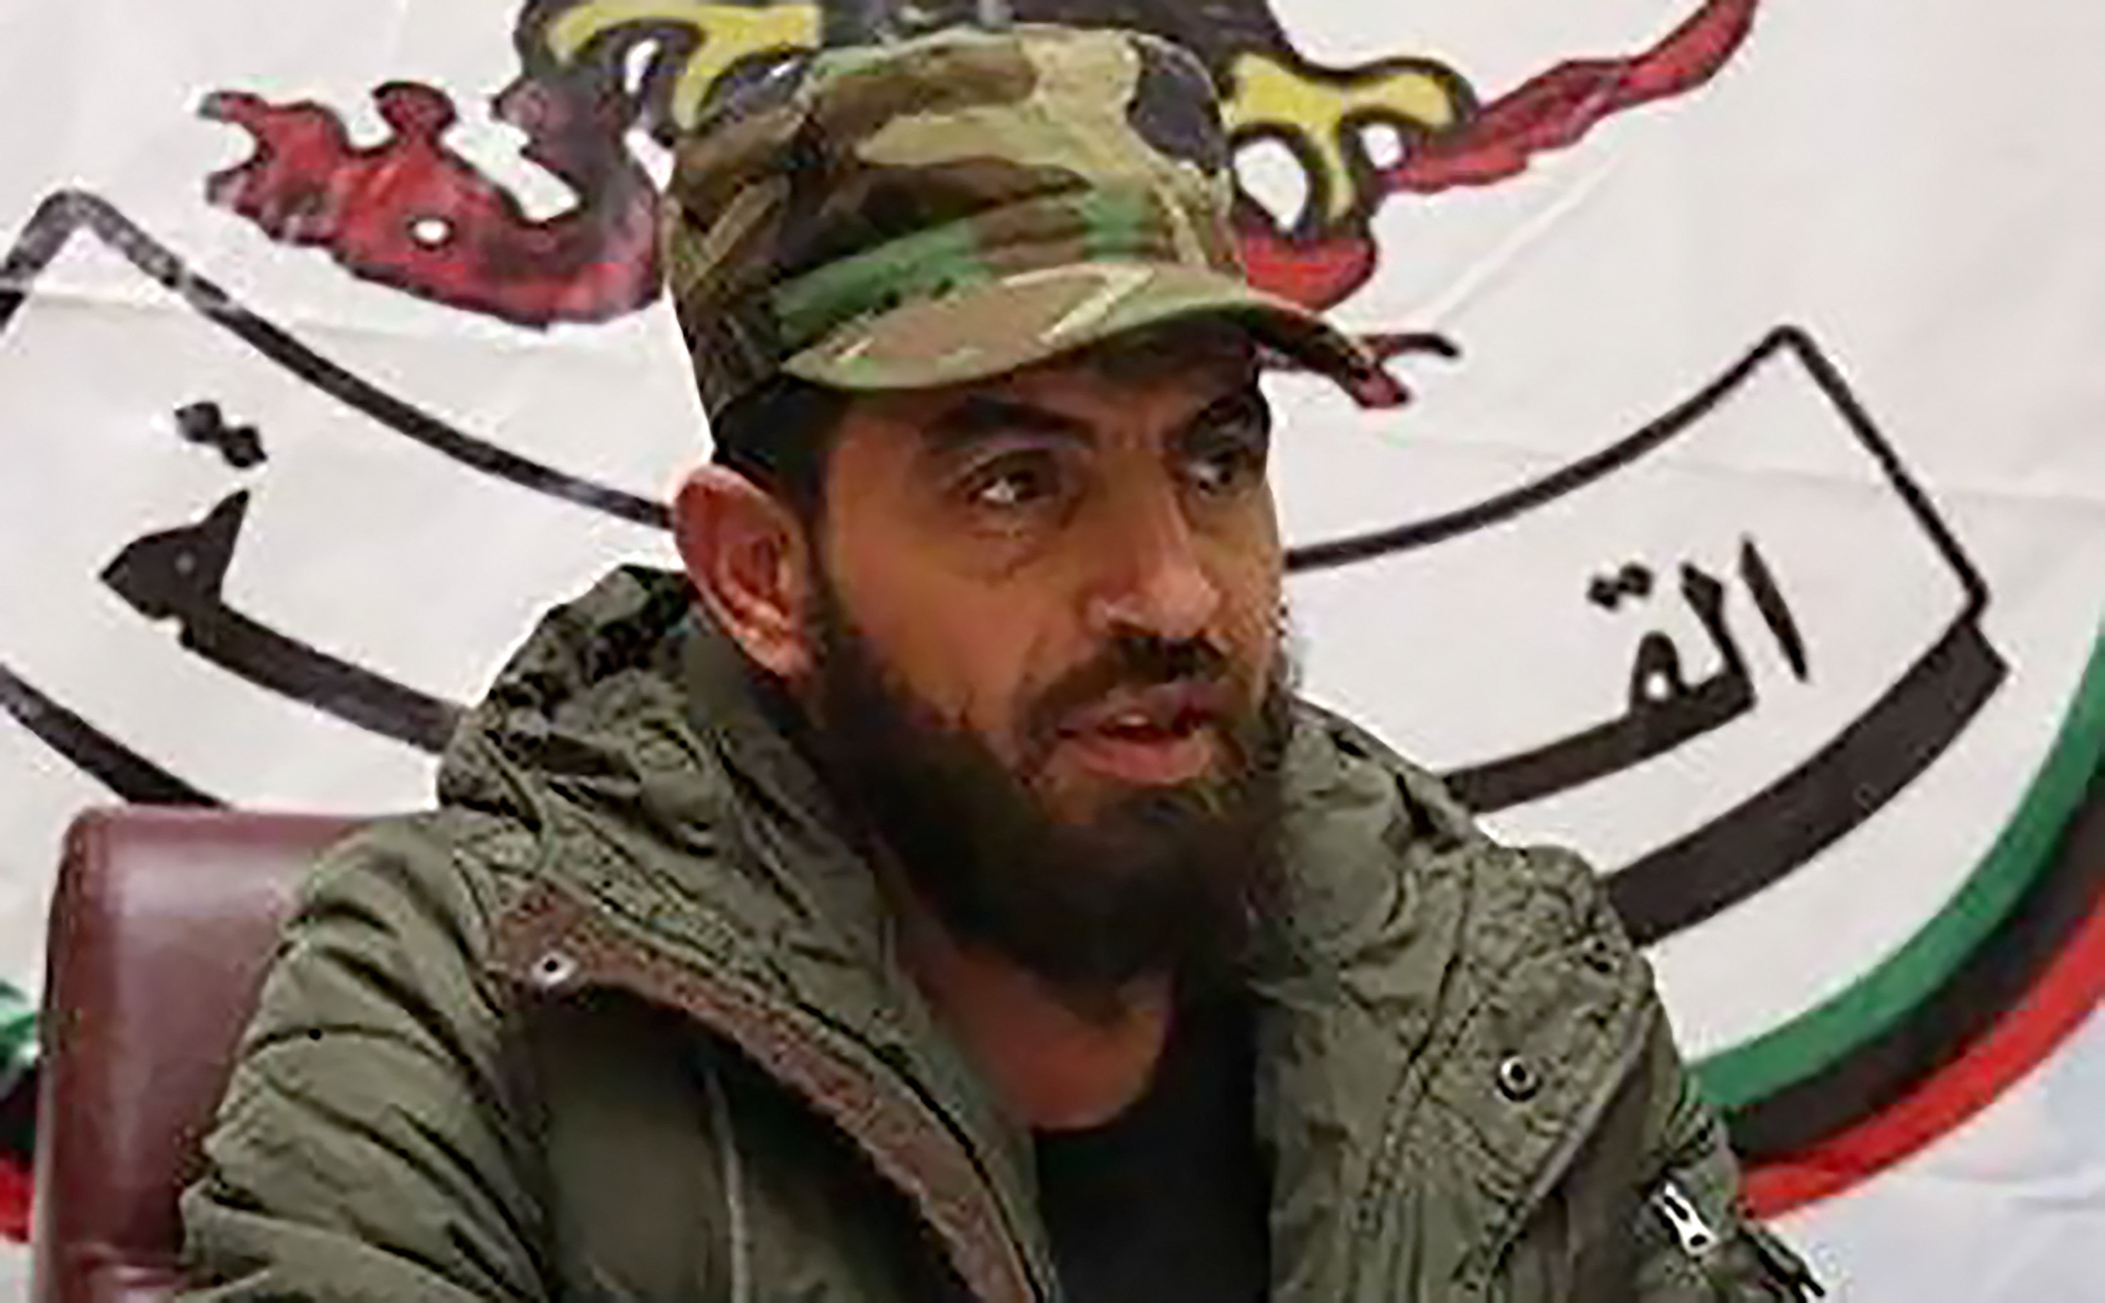 Werfalli was a top commander in Khalifa Haftar's self-styled Libyan National Army